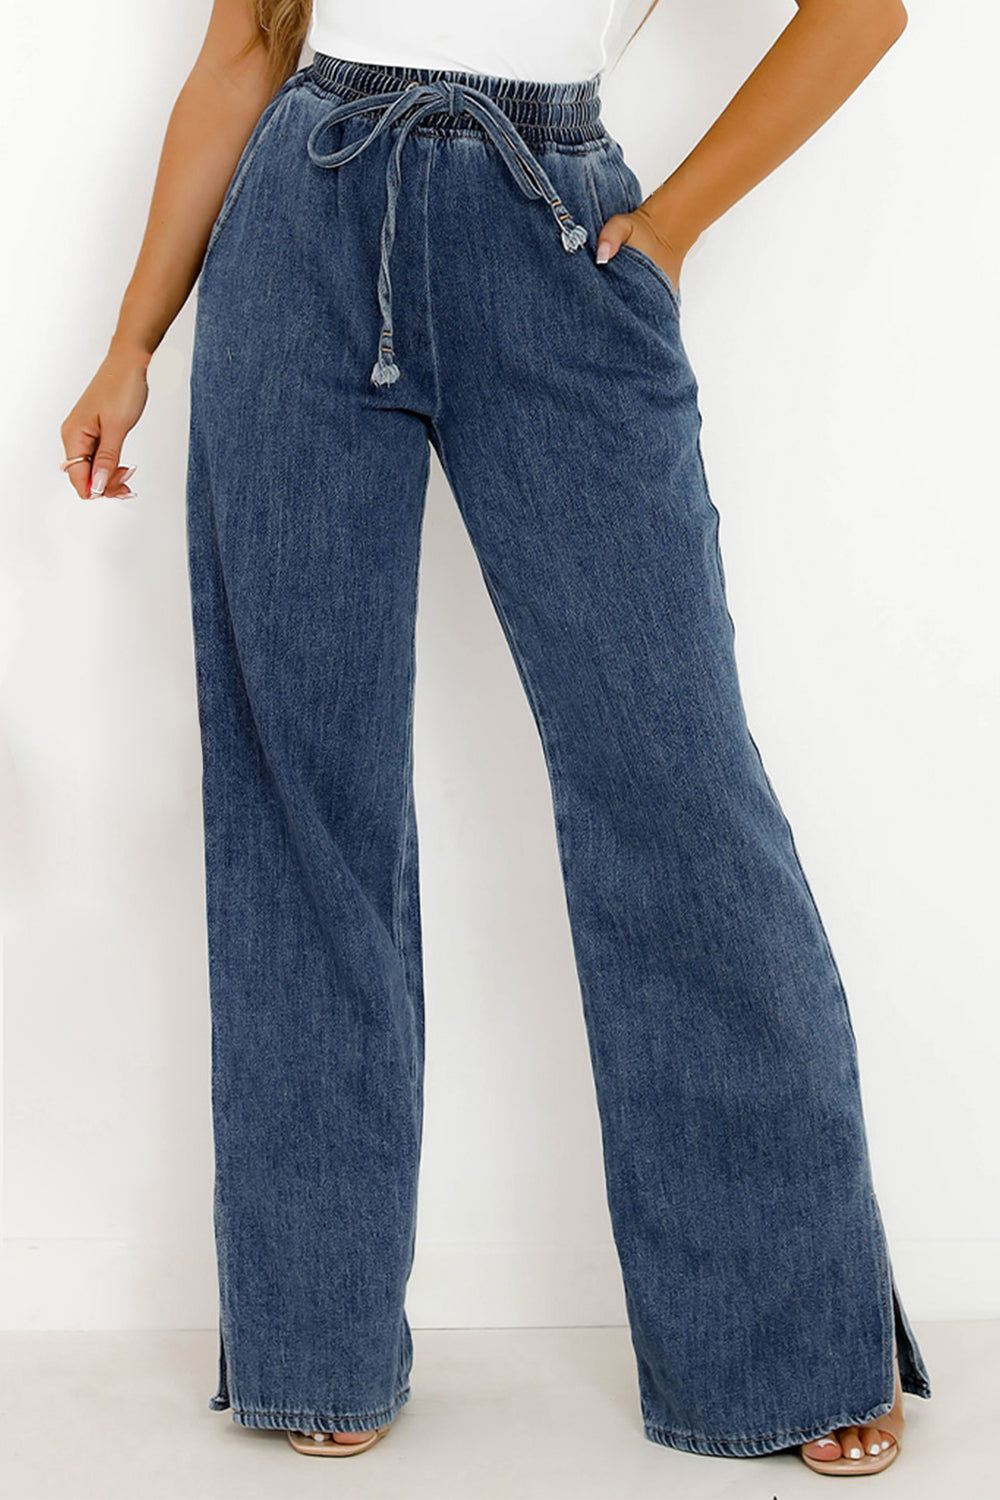 Blue Jeans | Slit Wide Leg Blue Jeans with Pockets